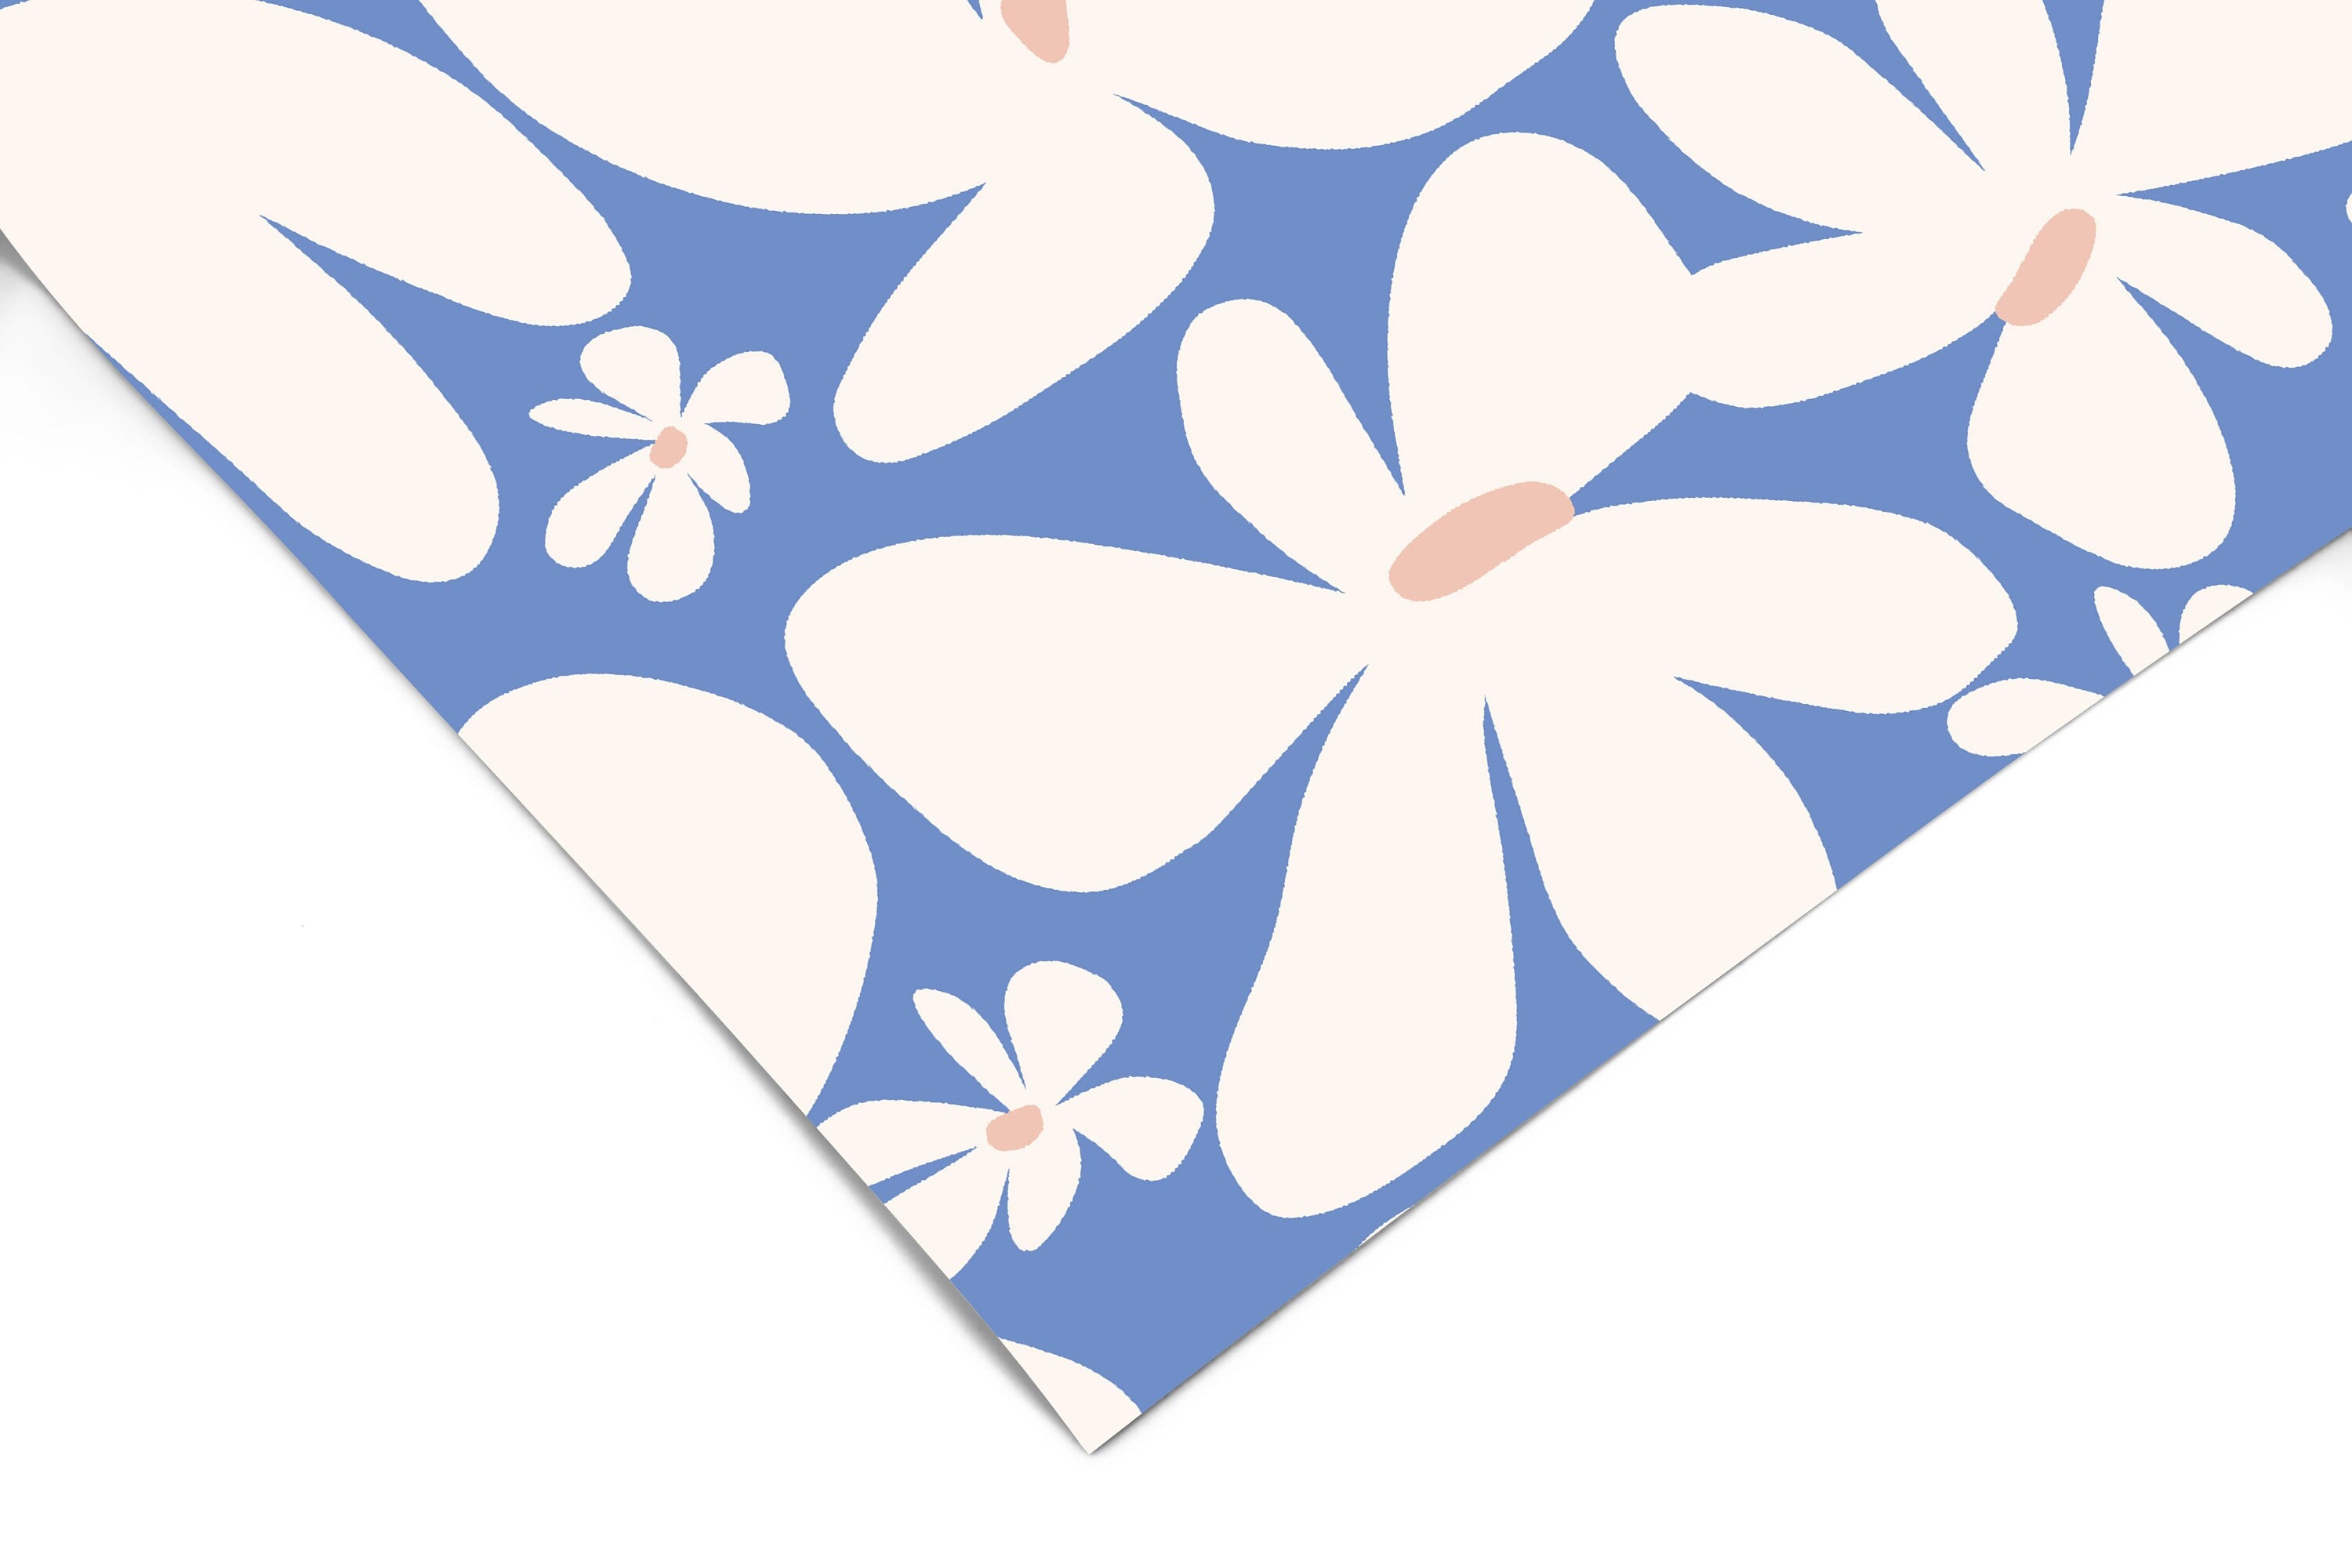 Large Retro Blue Floral Wallpaper | Girls Nursery Wallpaper | Kids Wallpaper | Childrens Wallpaper | Peel Stick Removable Wallpaper | 361